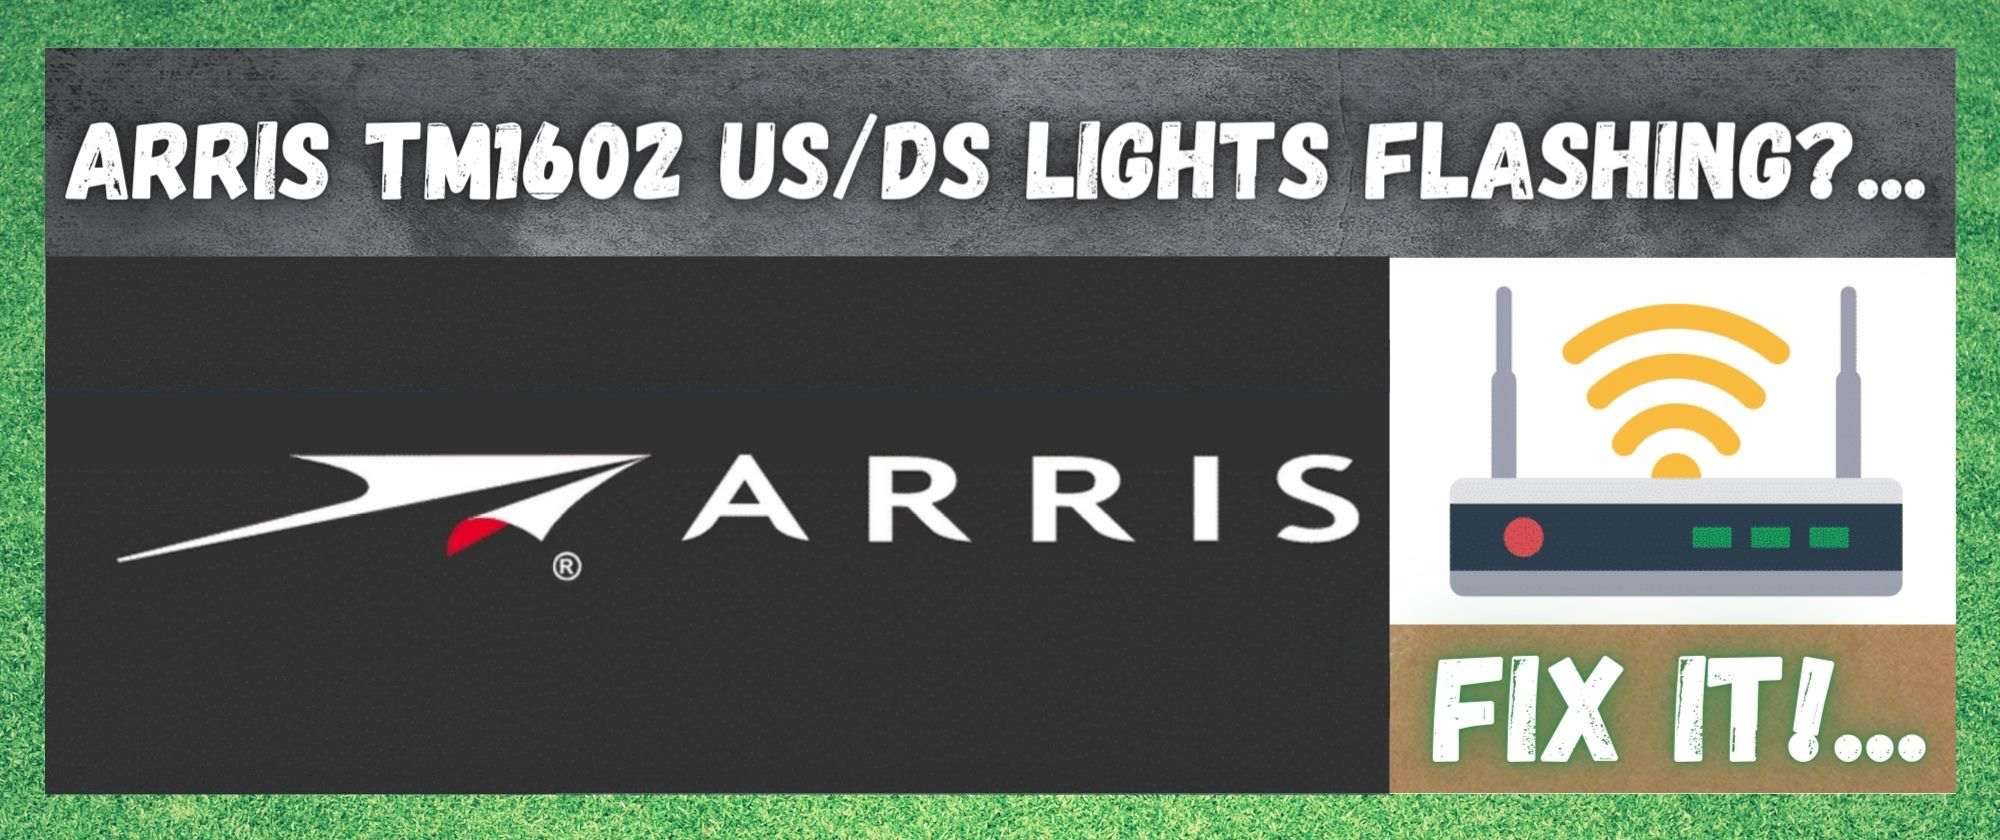 Arris TM1602 US DS Flashing